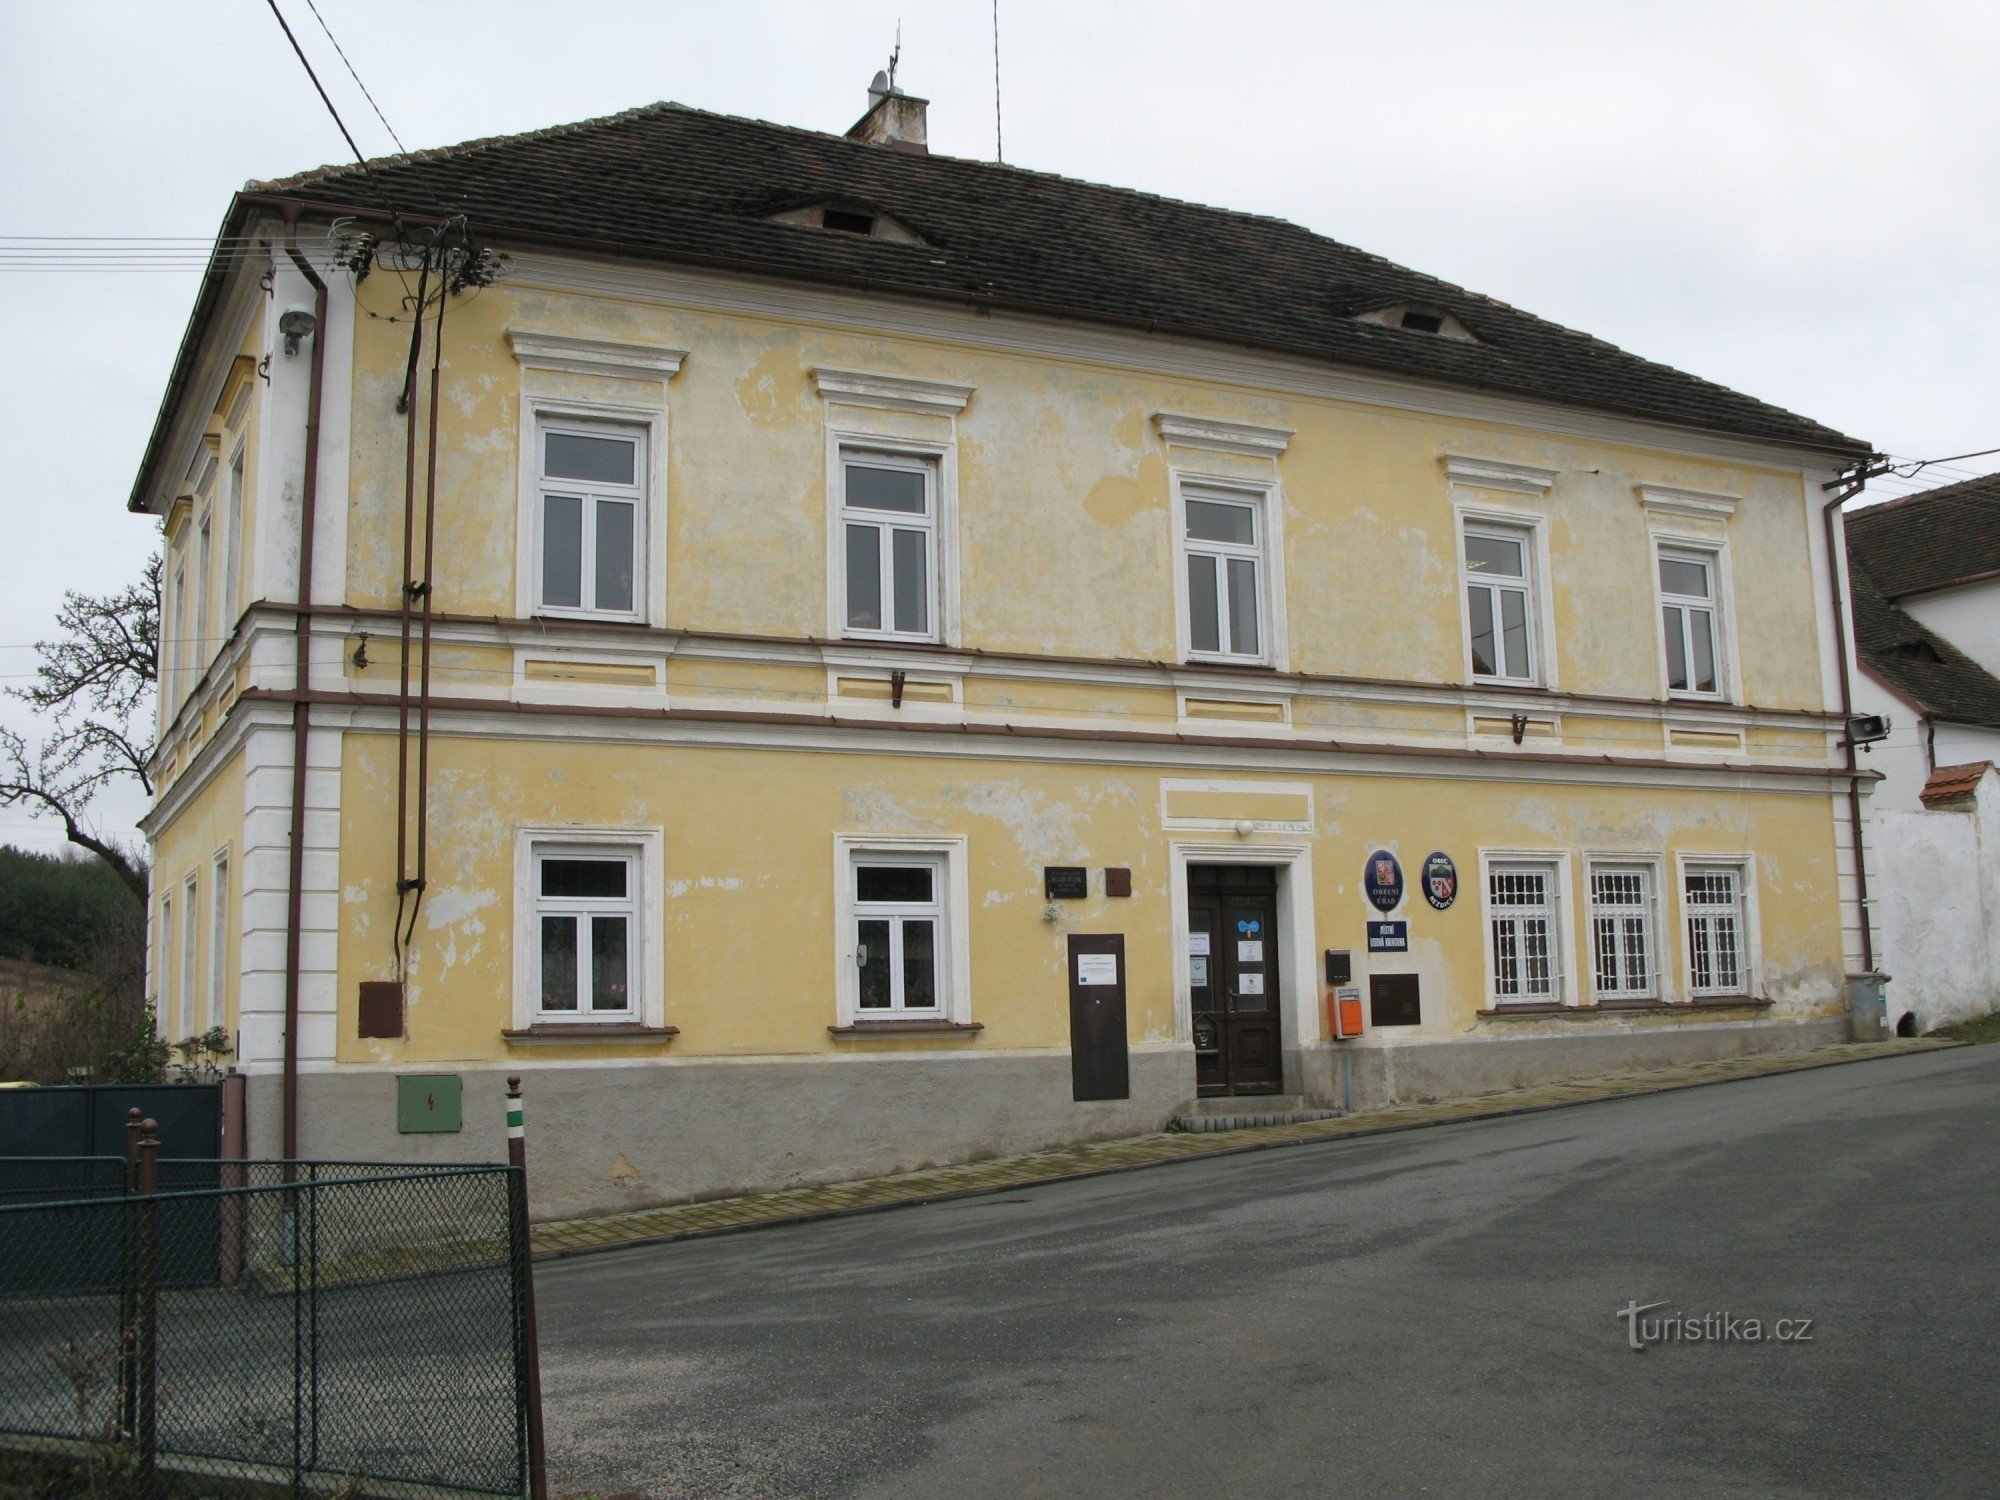 Nezdice - kommunekontor, tidligere kommuneskole fra 1847